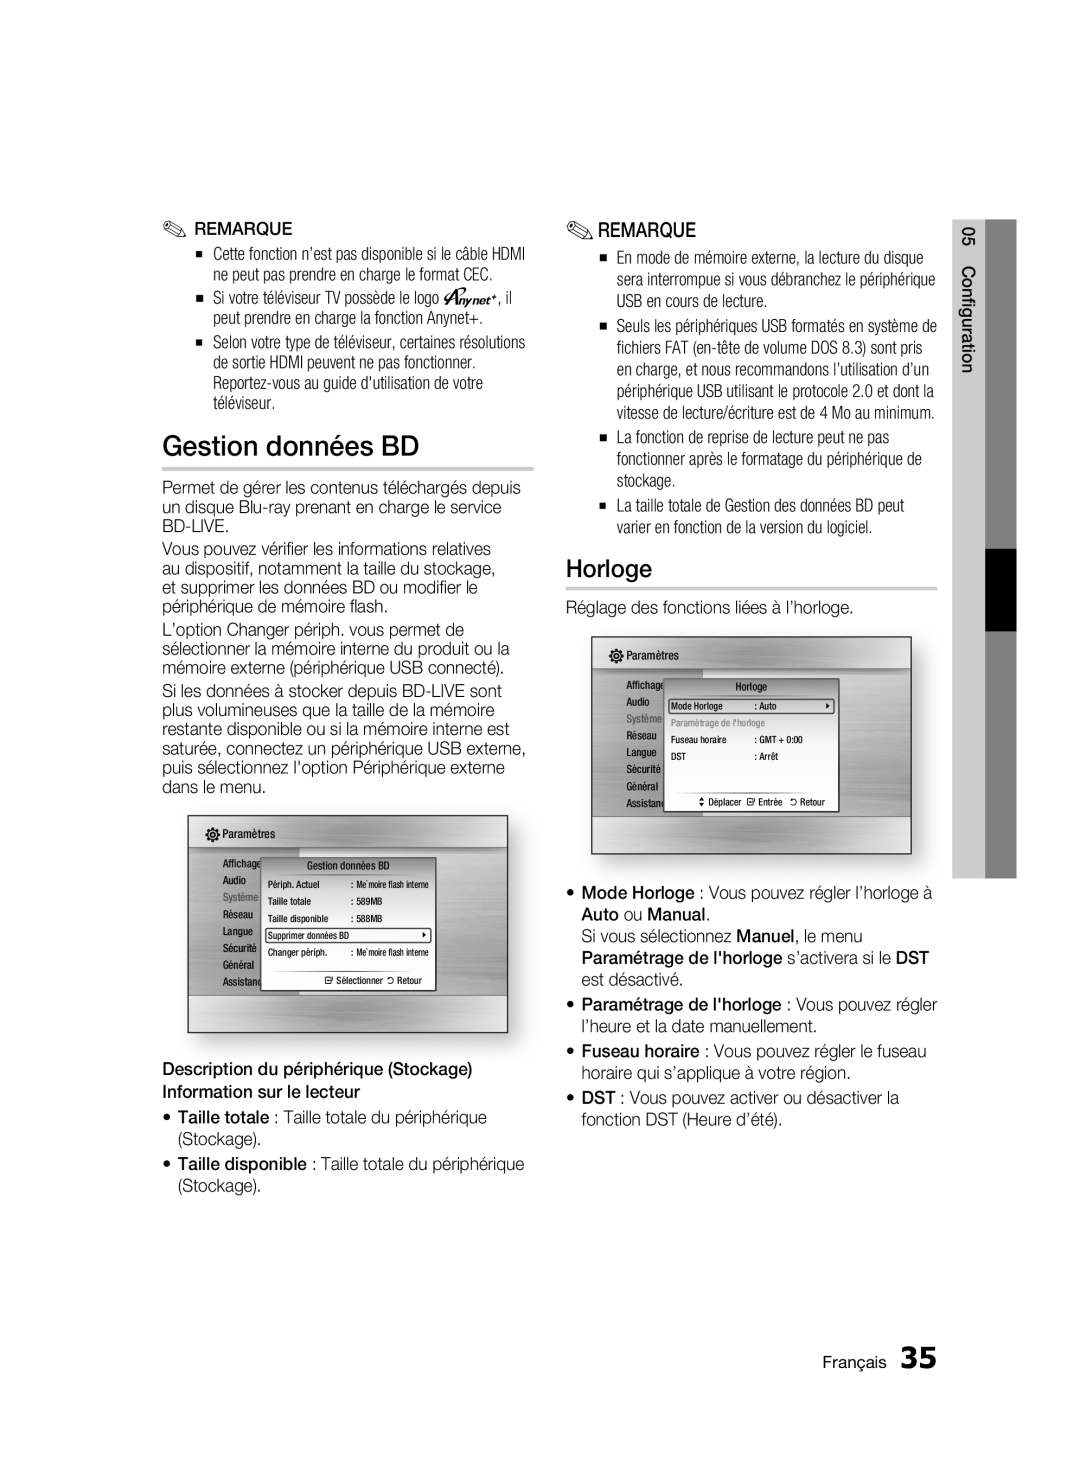 Samsung 01942G-BD-C6300-XAC-0823 user manual Horloge, Remarque, Gestion données BD 